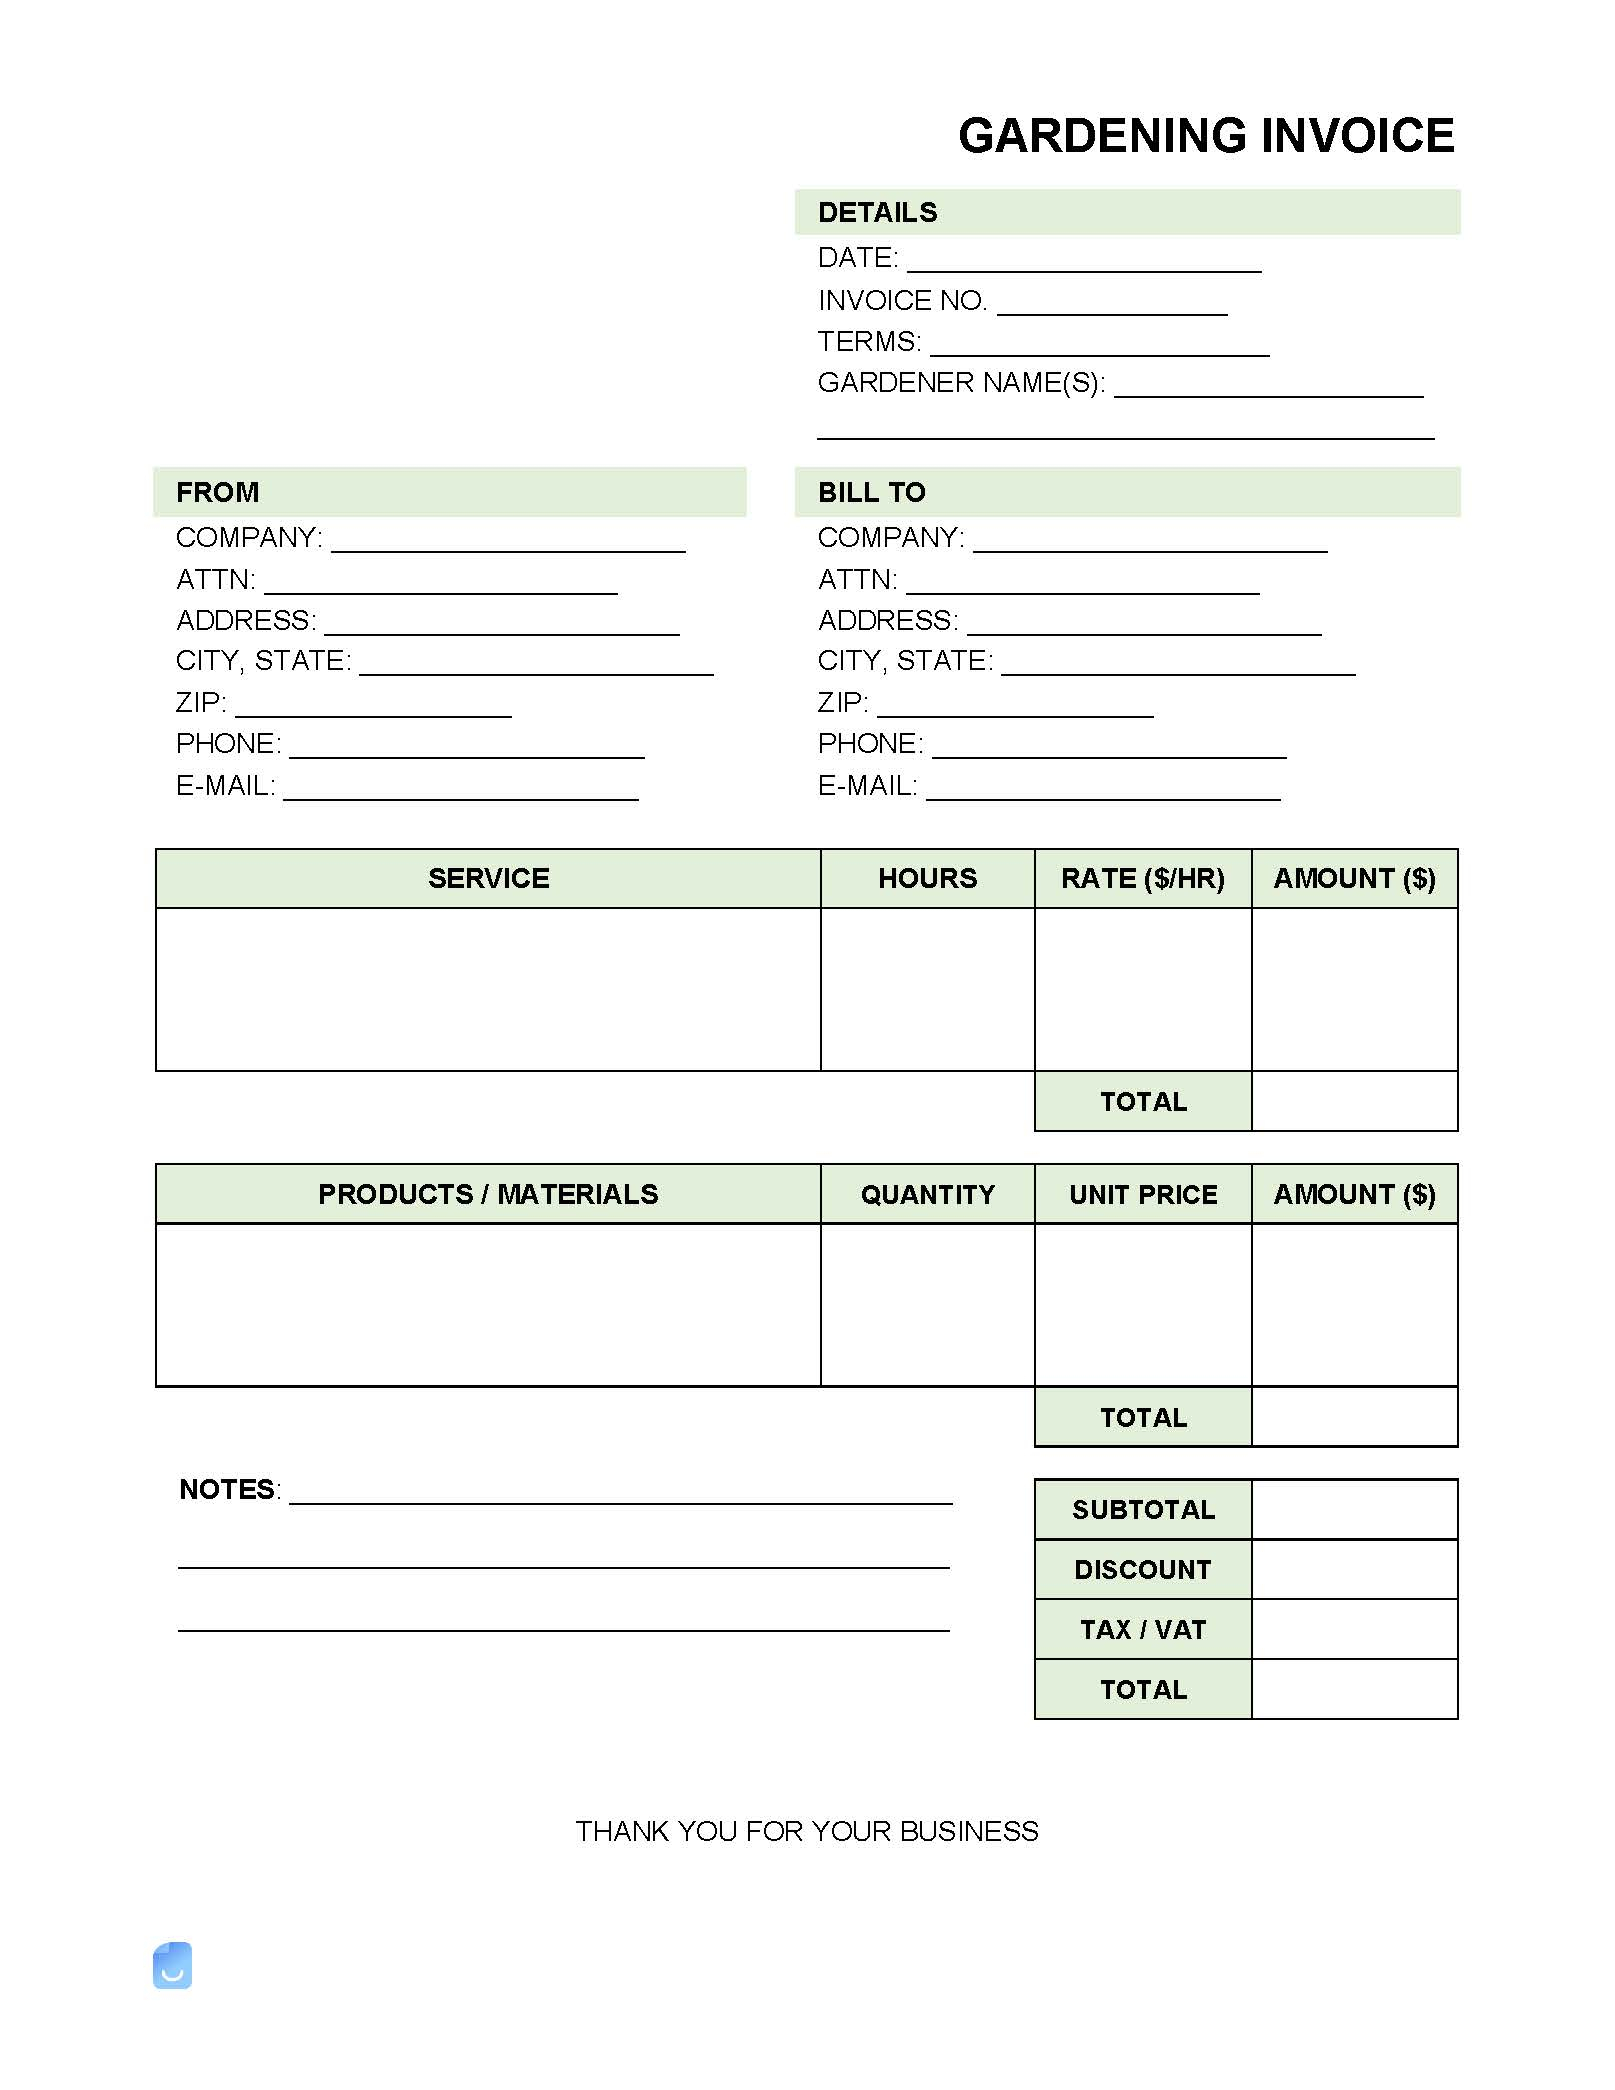 Gardening Service Invoice Template | Invoice Maker In Gardening Invoice Template